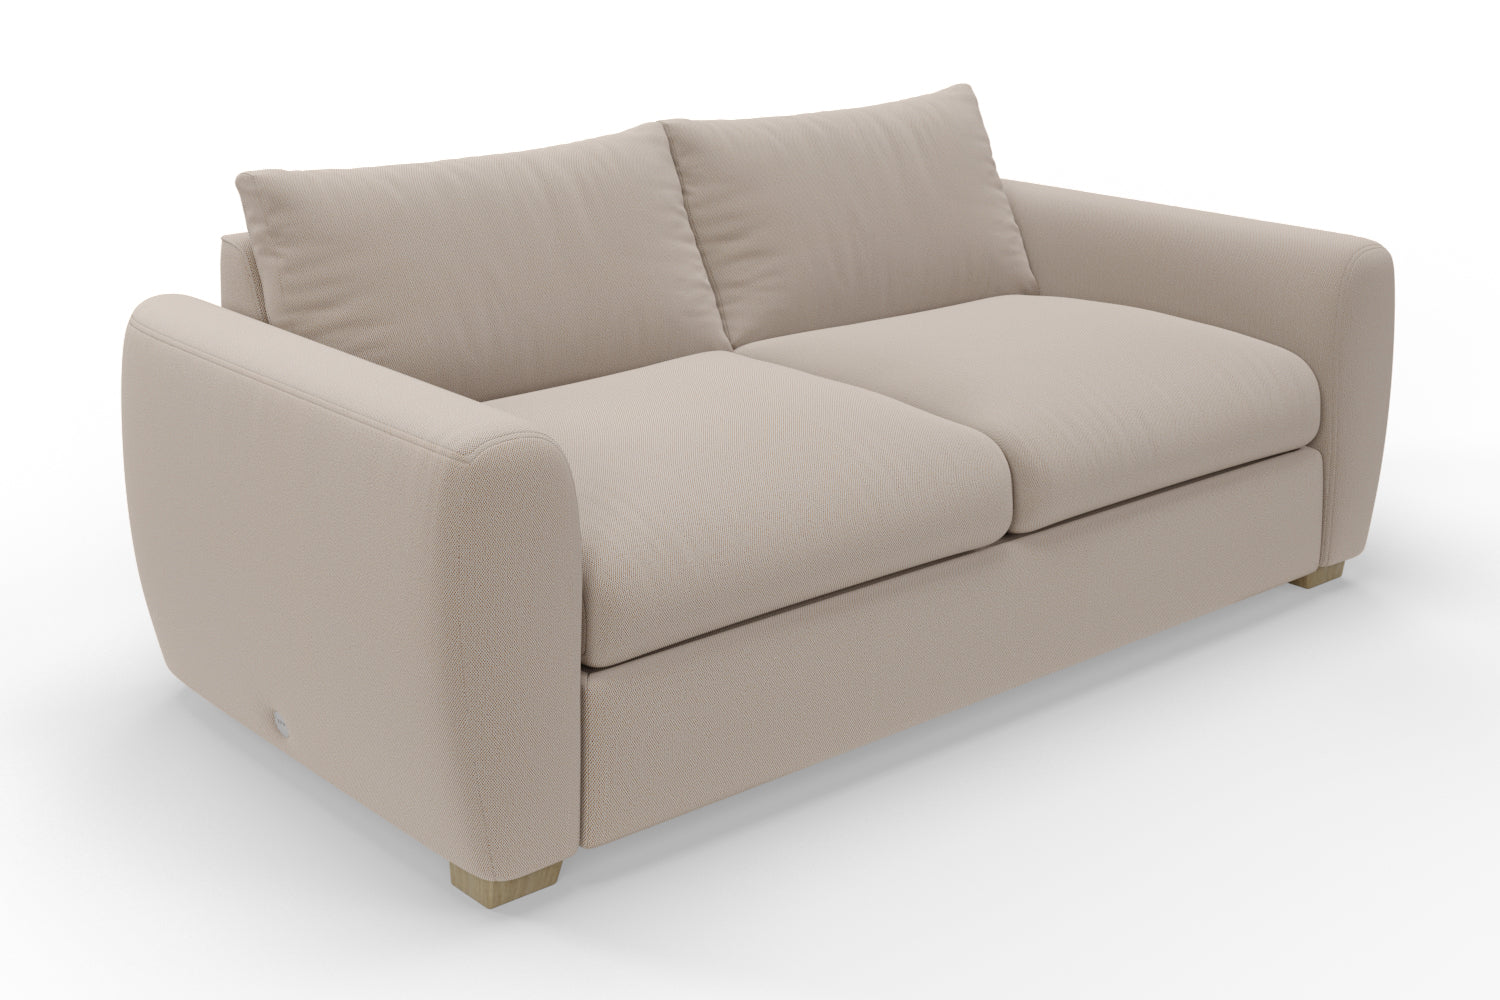 SNUG | The Cloud Sundae 3 Seater Sofa in Oatmeal